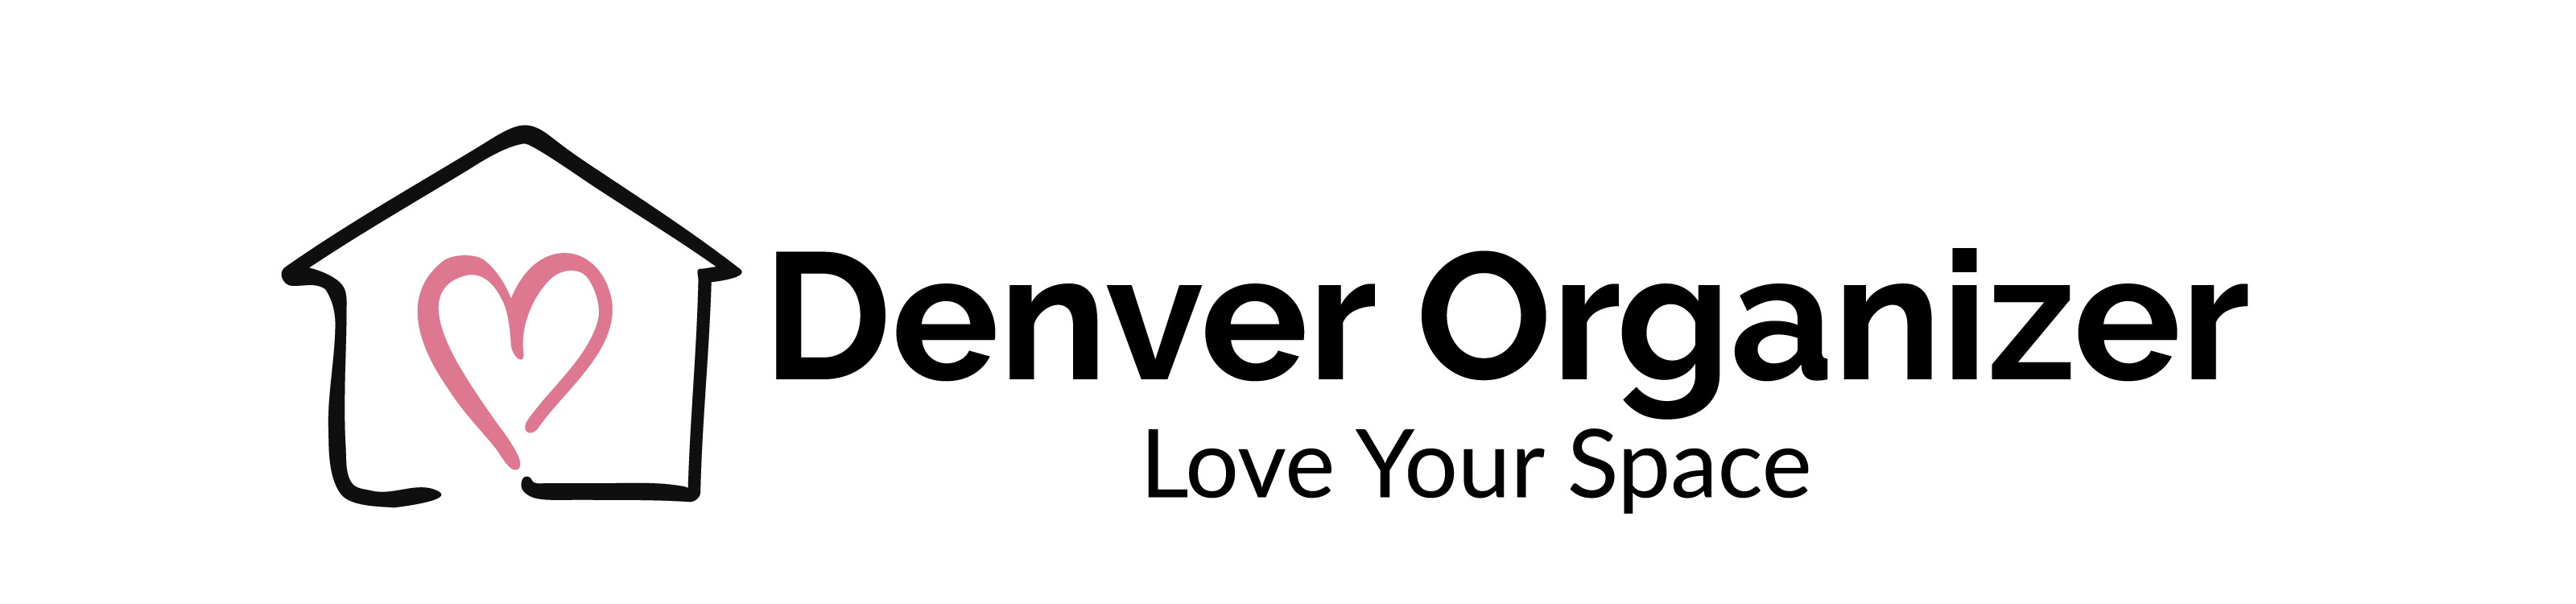 Denver Organizer | Professional Organizer and Coach | Judy Nicholson